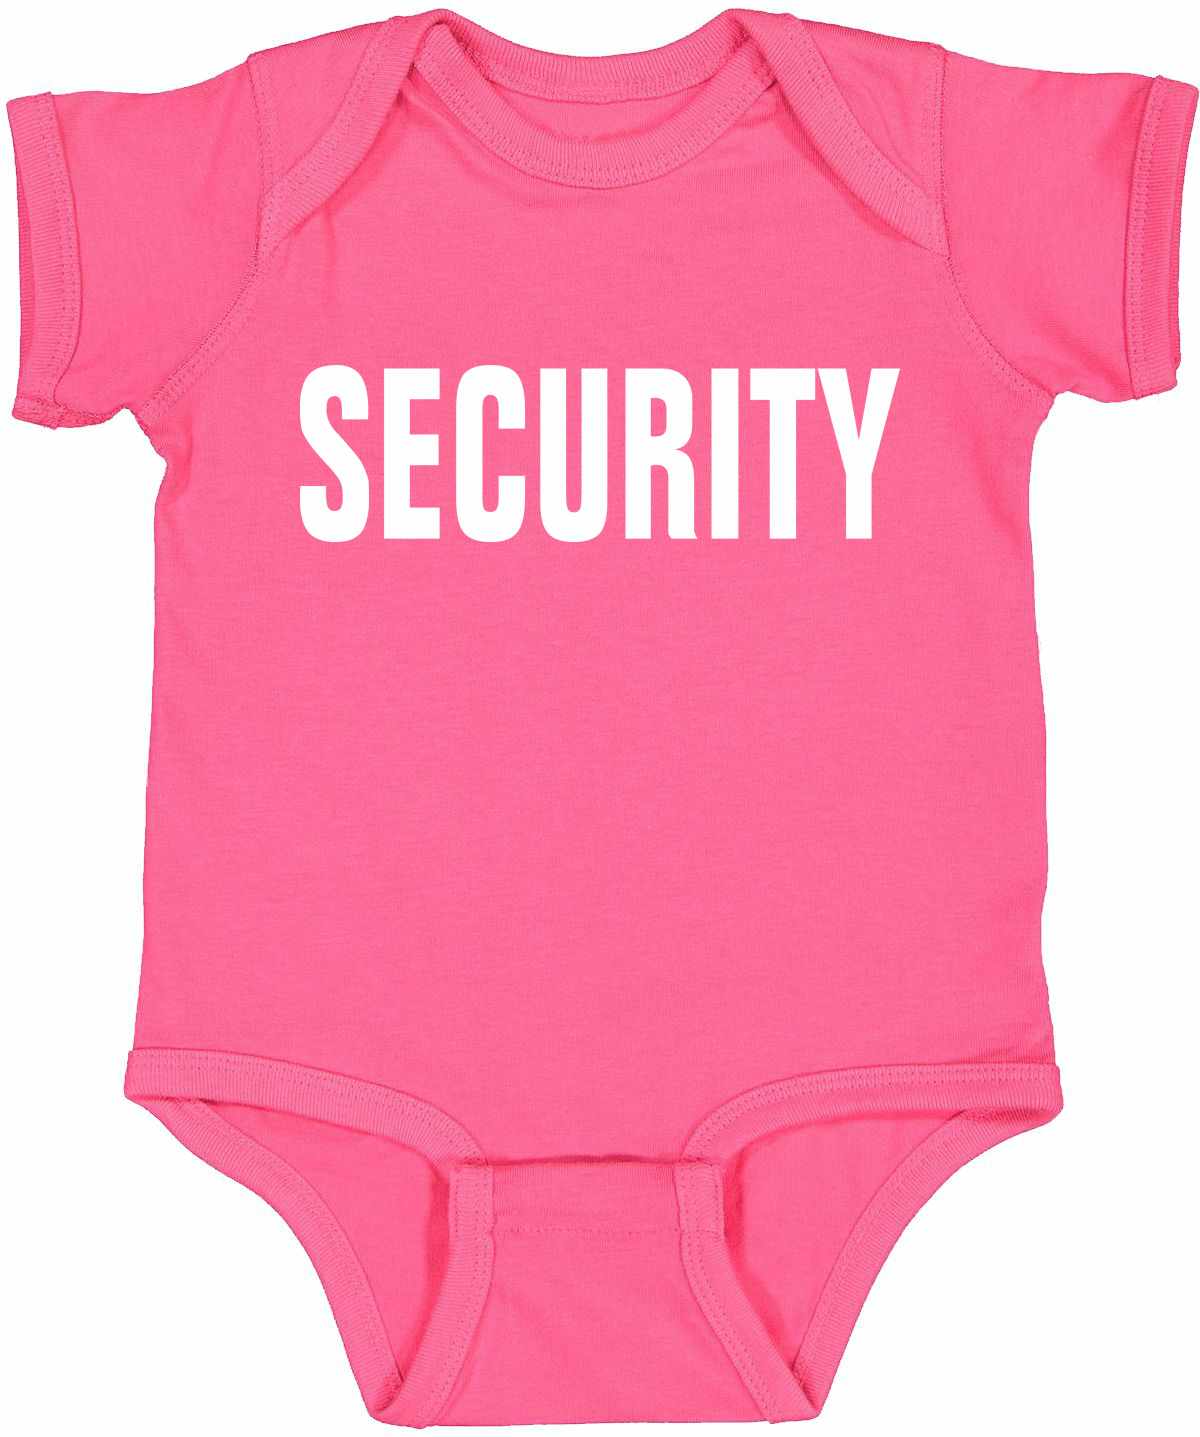 SECURITY on Infant BodySuit (#58-10)